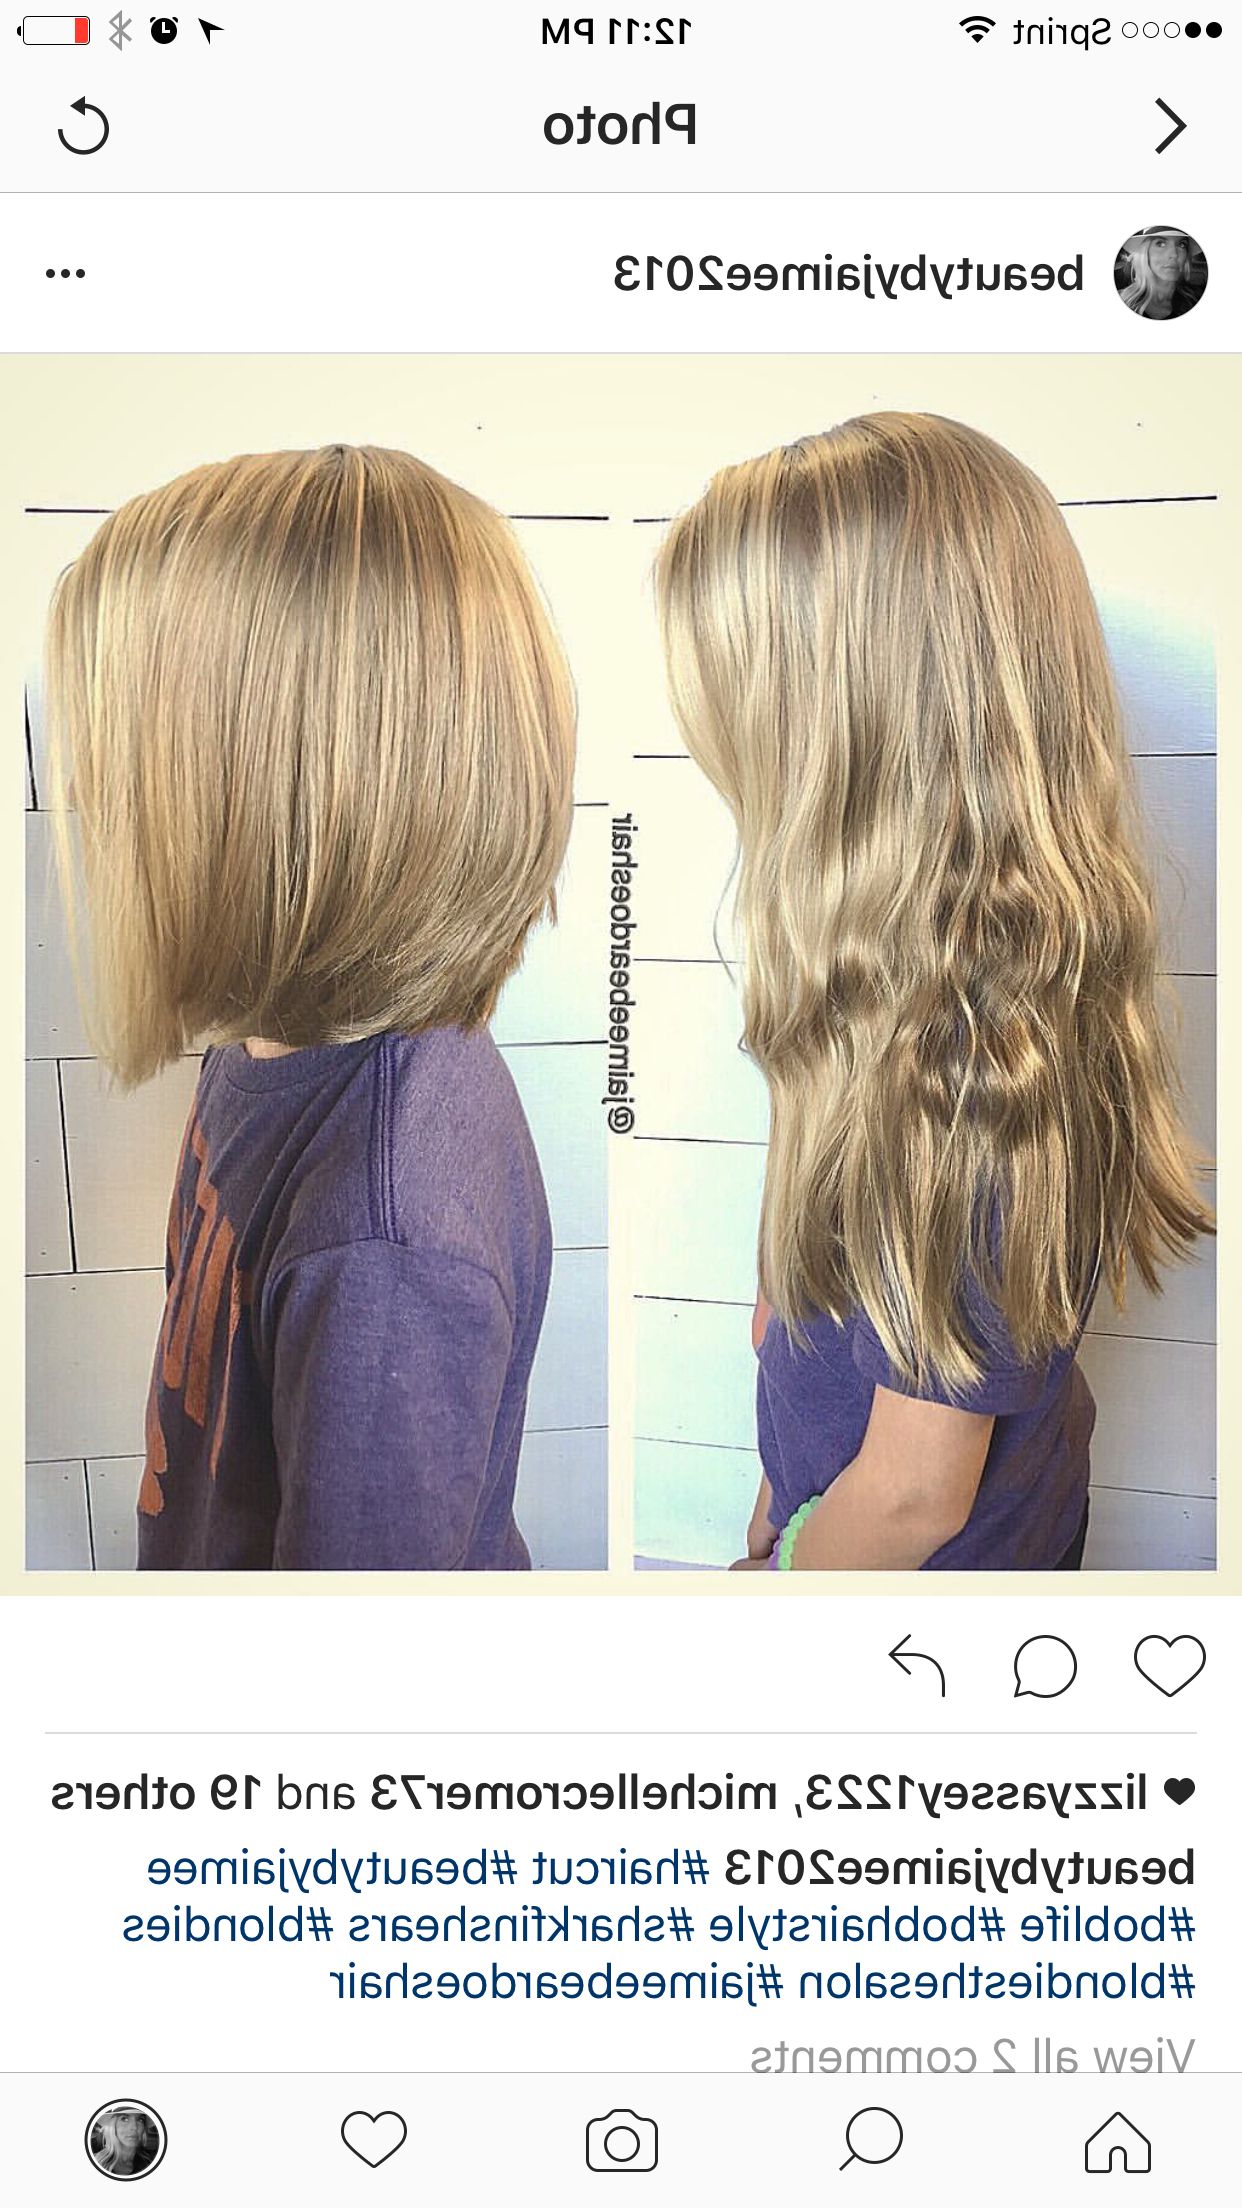 Little Girls Haircut From Long Locks To Shoulder Length Bob | Jaimee Regarding Short Wispy Hairstyles For Fine Locks (View 16 of 20)